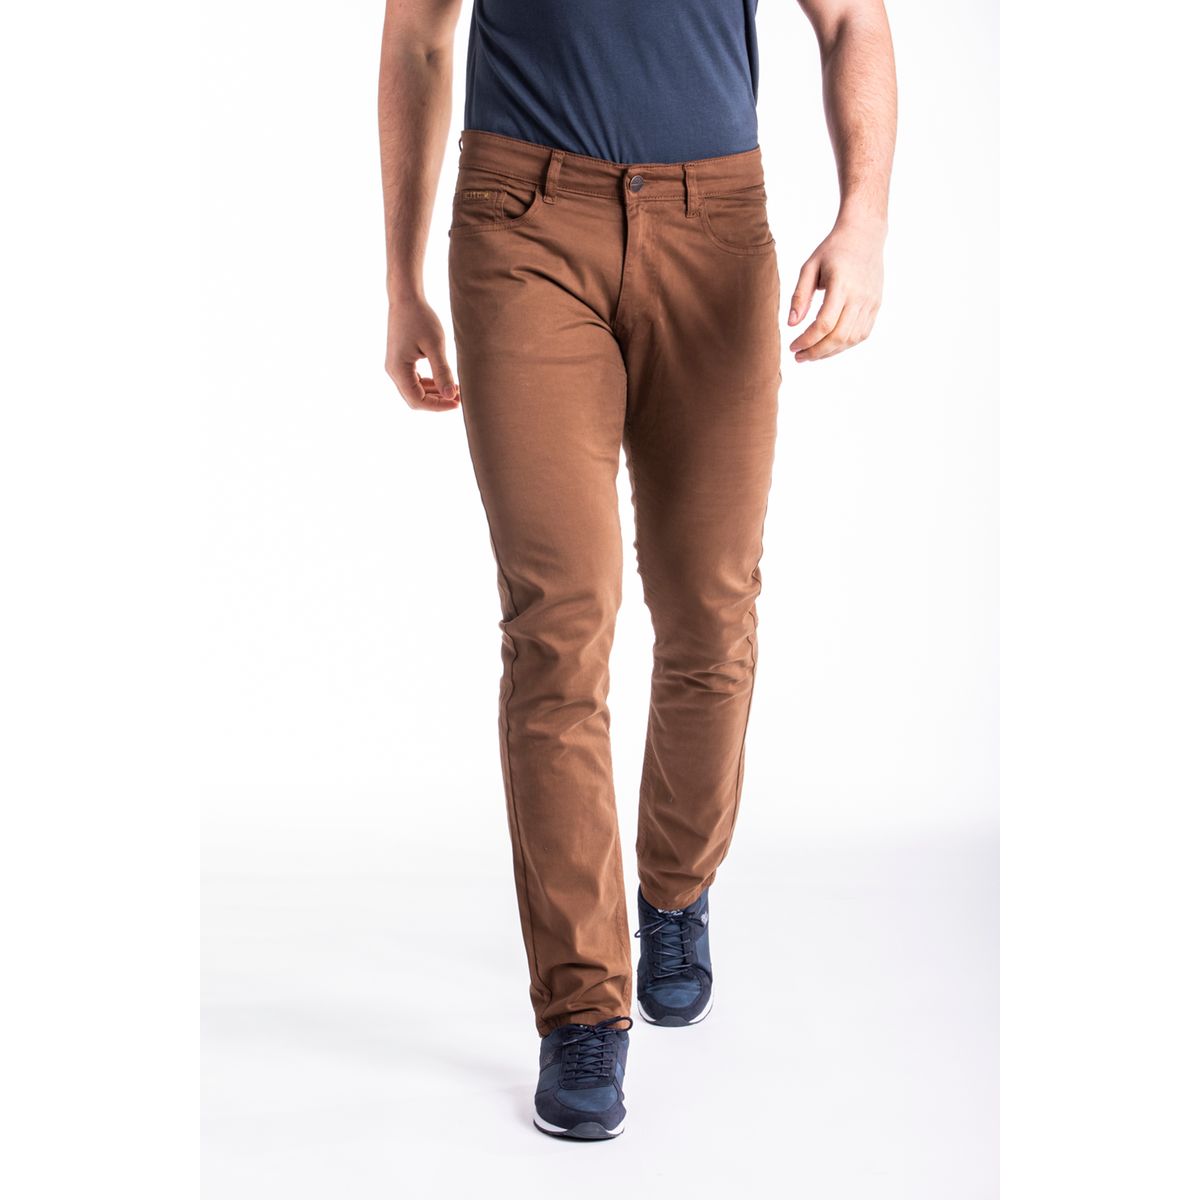 Pantalon 5 poches coupe droite Plat Avant Pantalon/Pantalon Chino PRP 69 $ 